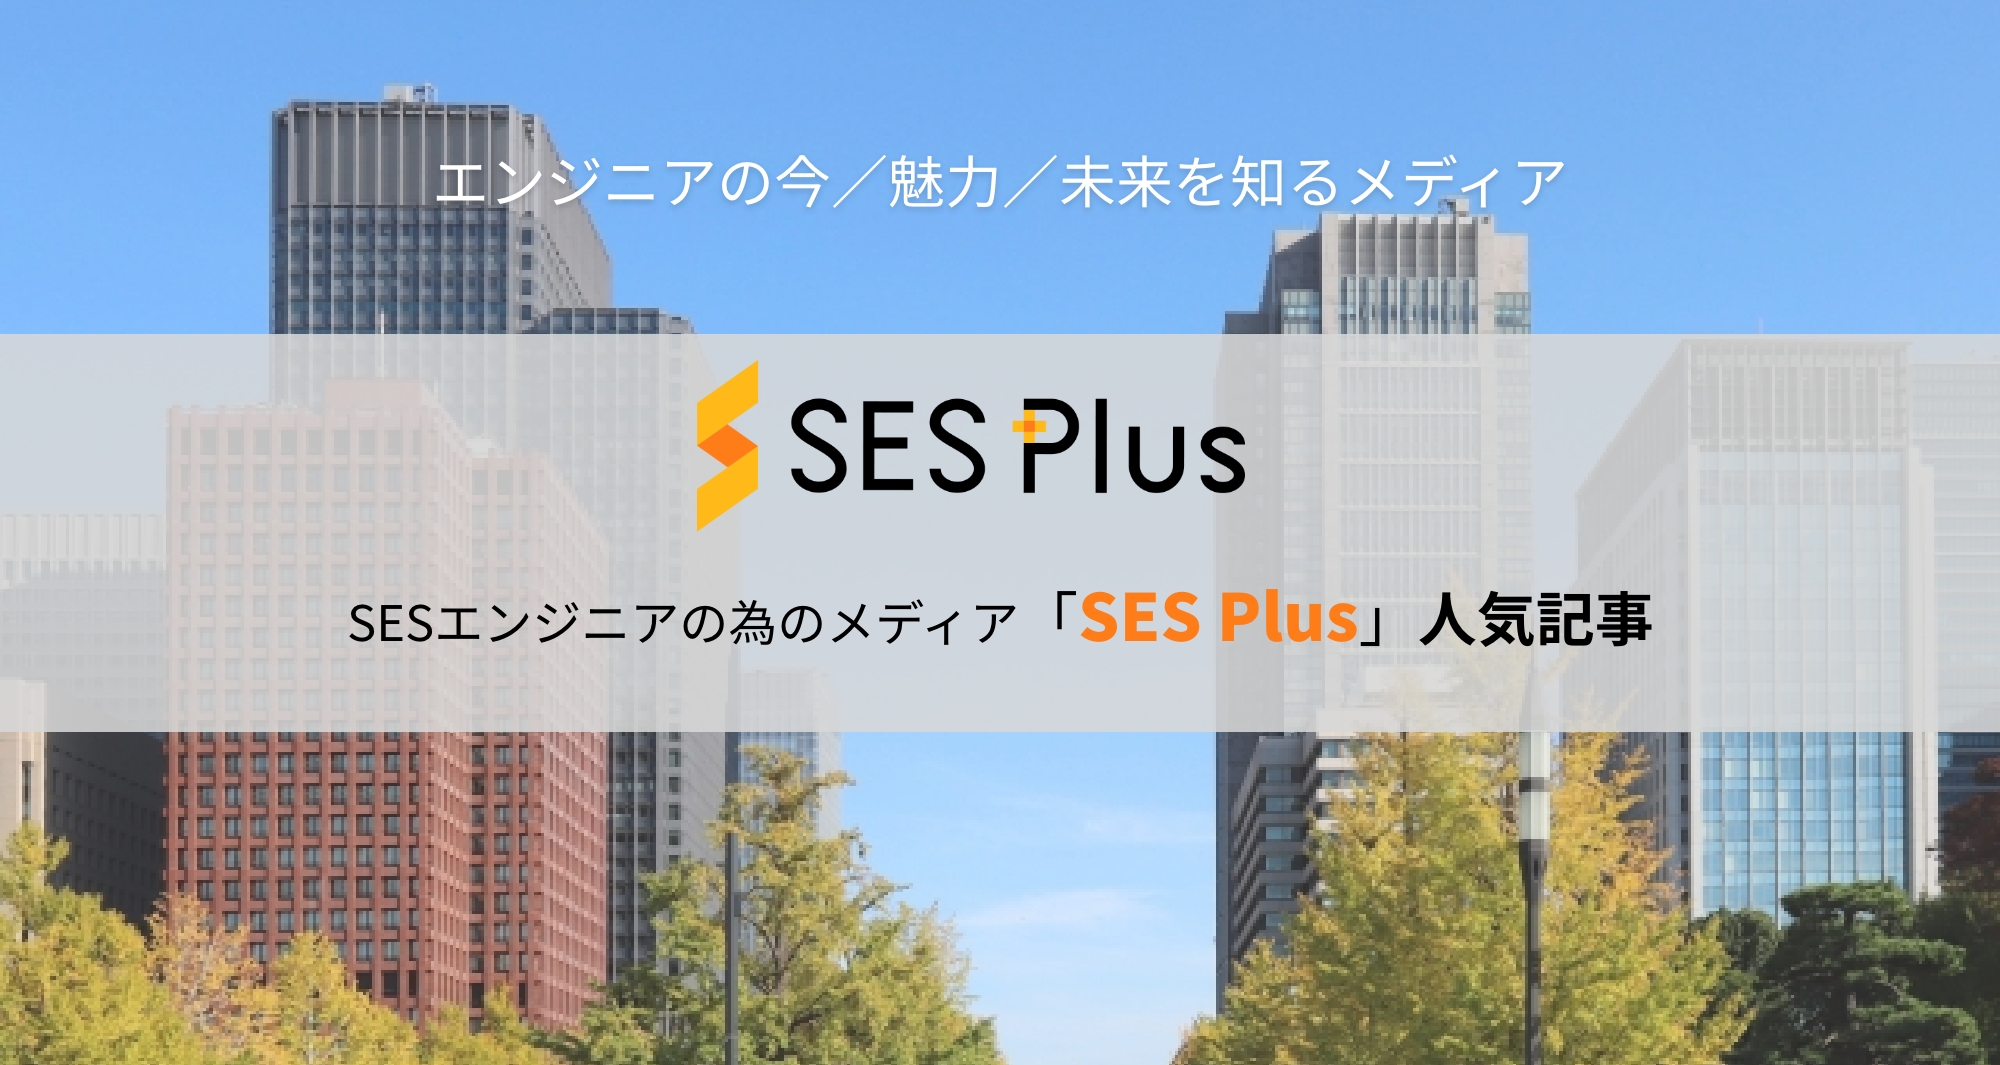 SESエンジニアの為のメディア「SES Plus」の人気記事3選